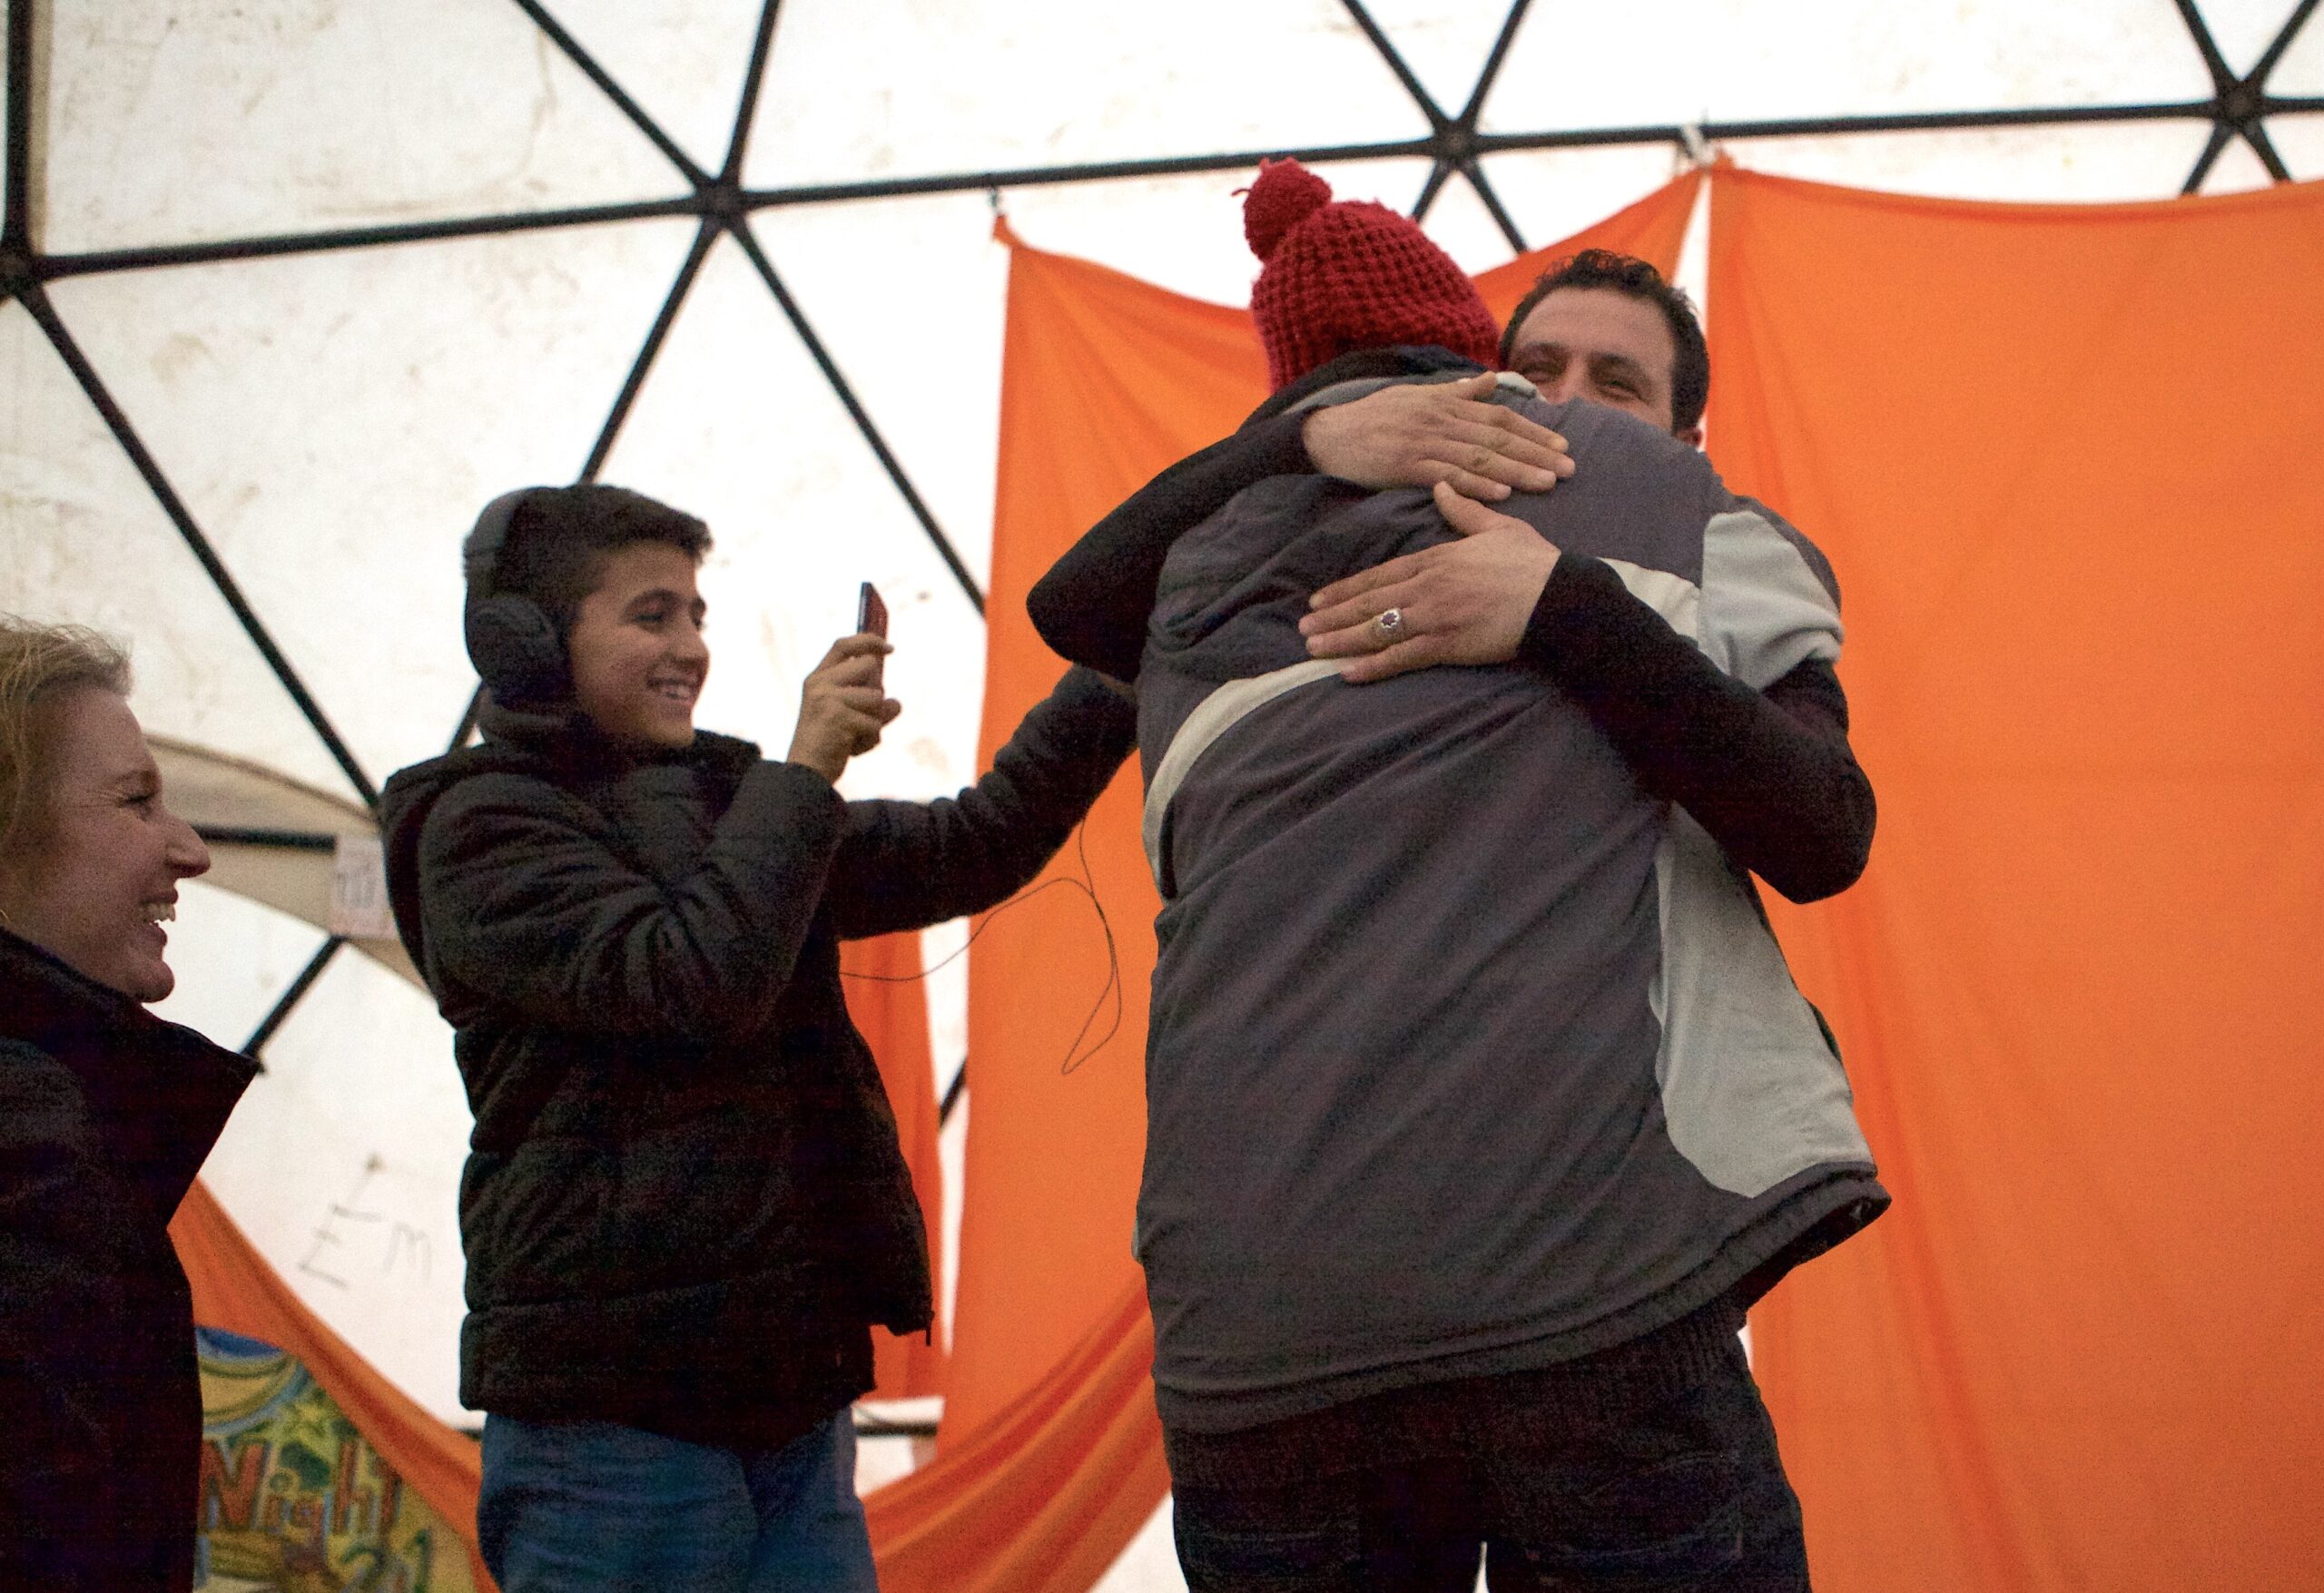 A Virtual Hug From London to Calais